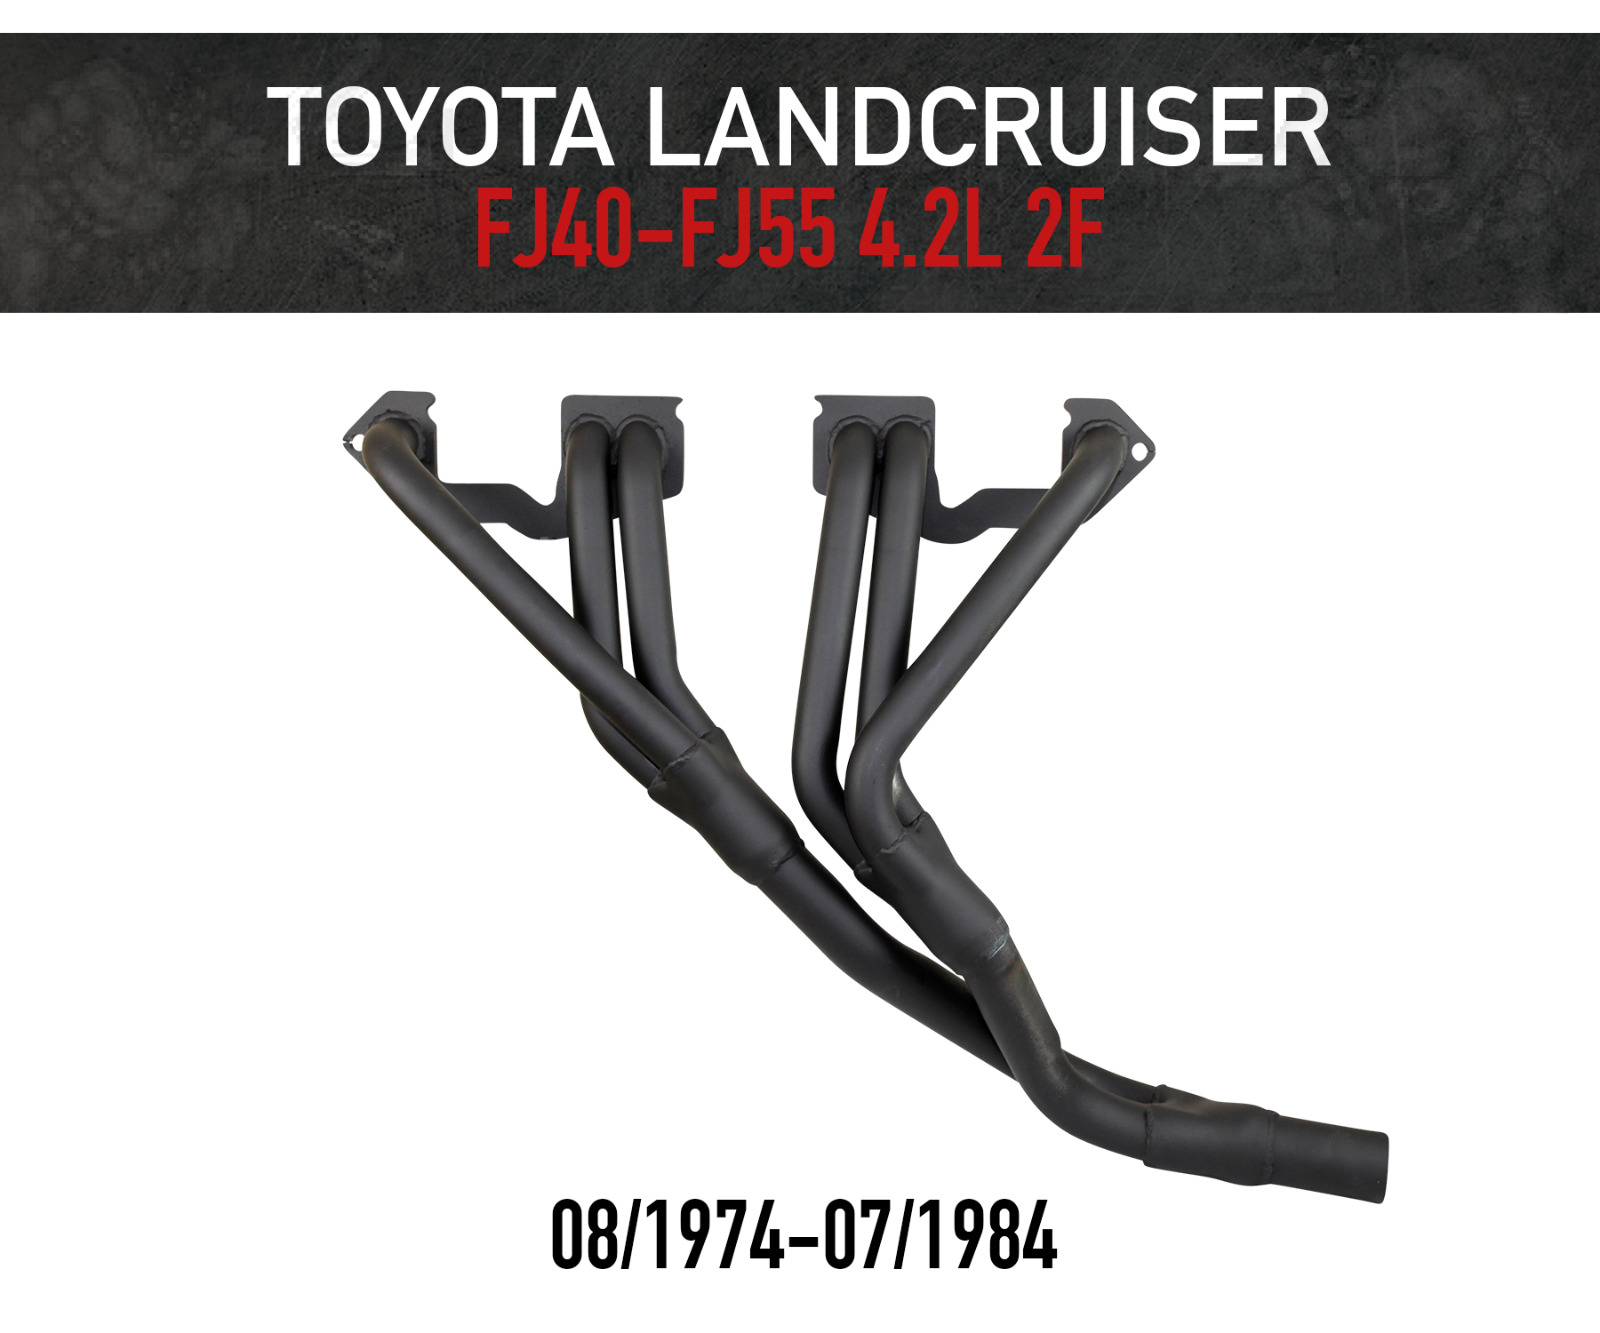 Headers / Extractors for Toyota Landcruiser FJ40 - FJ55 4.2L 2F Motor